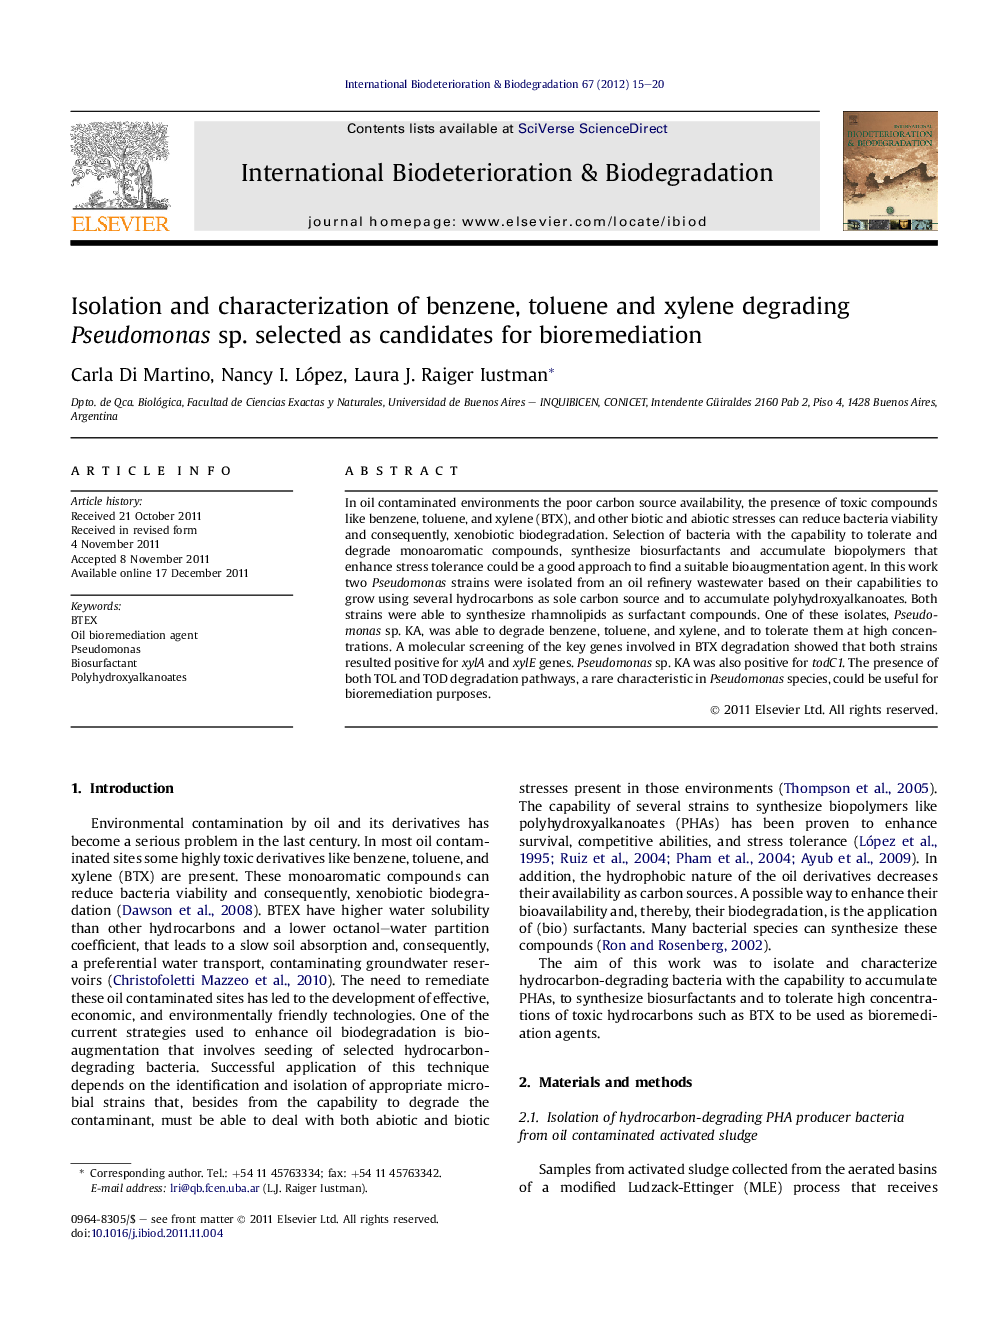 Isolation and characterization of benzene, toluene and xylene degrading Pseudomonas sp. selected as candidates for bioremediation